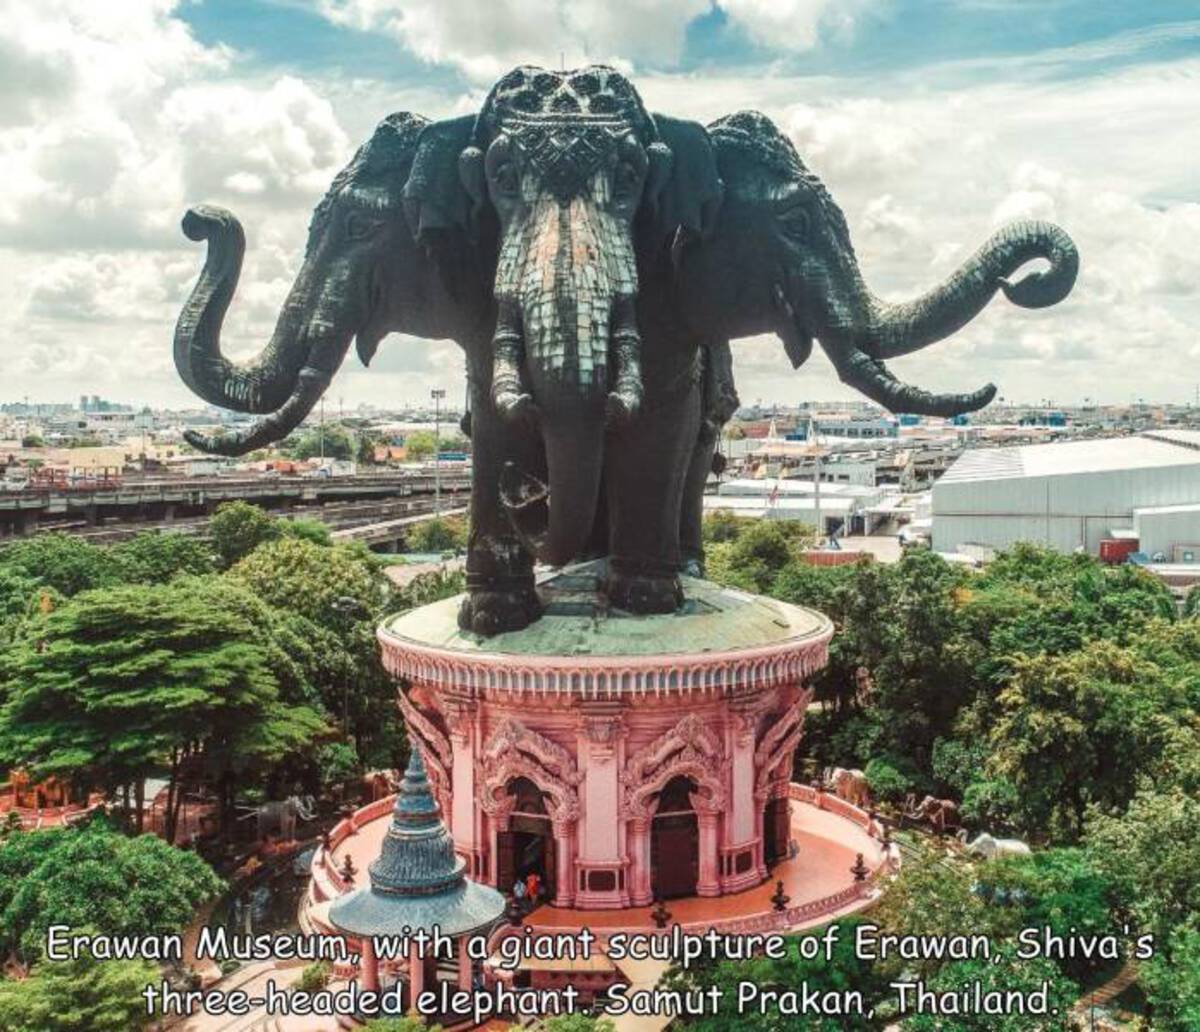 the erawan museum - Erawan Museum, with a giant sculpture of Erawan, Shiva s threeheaded elephant. Samut Prakan, Thailand.